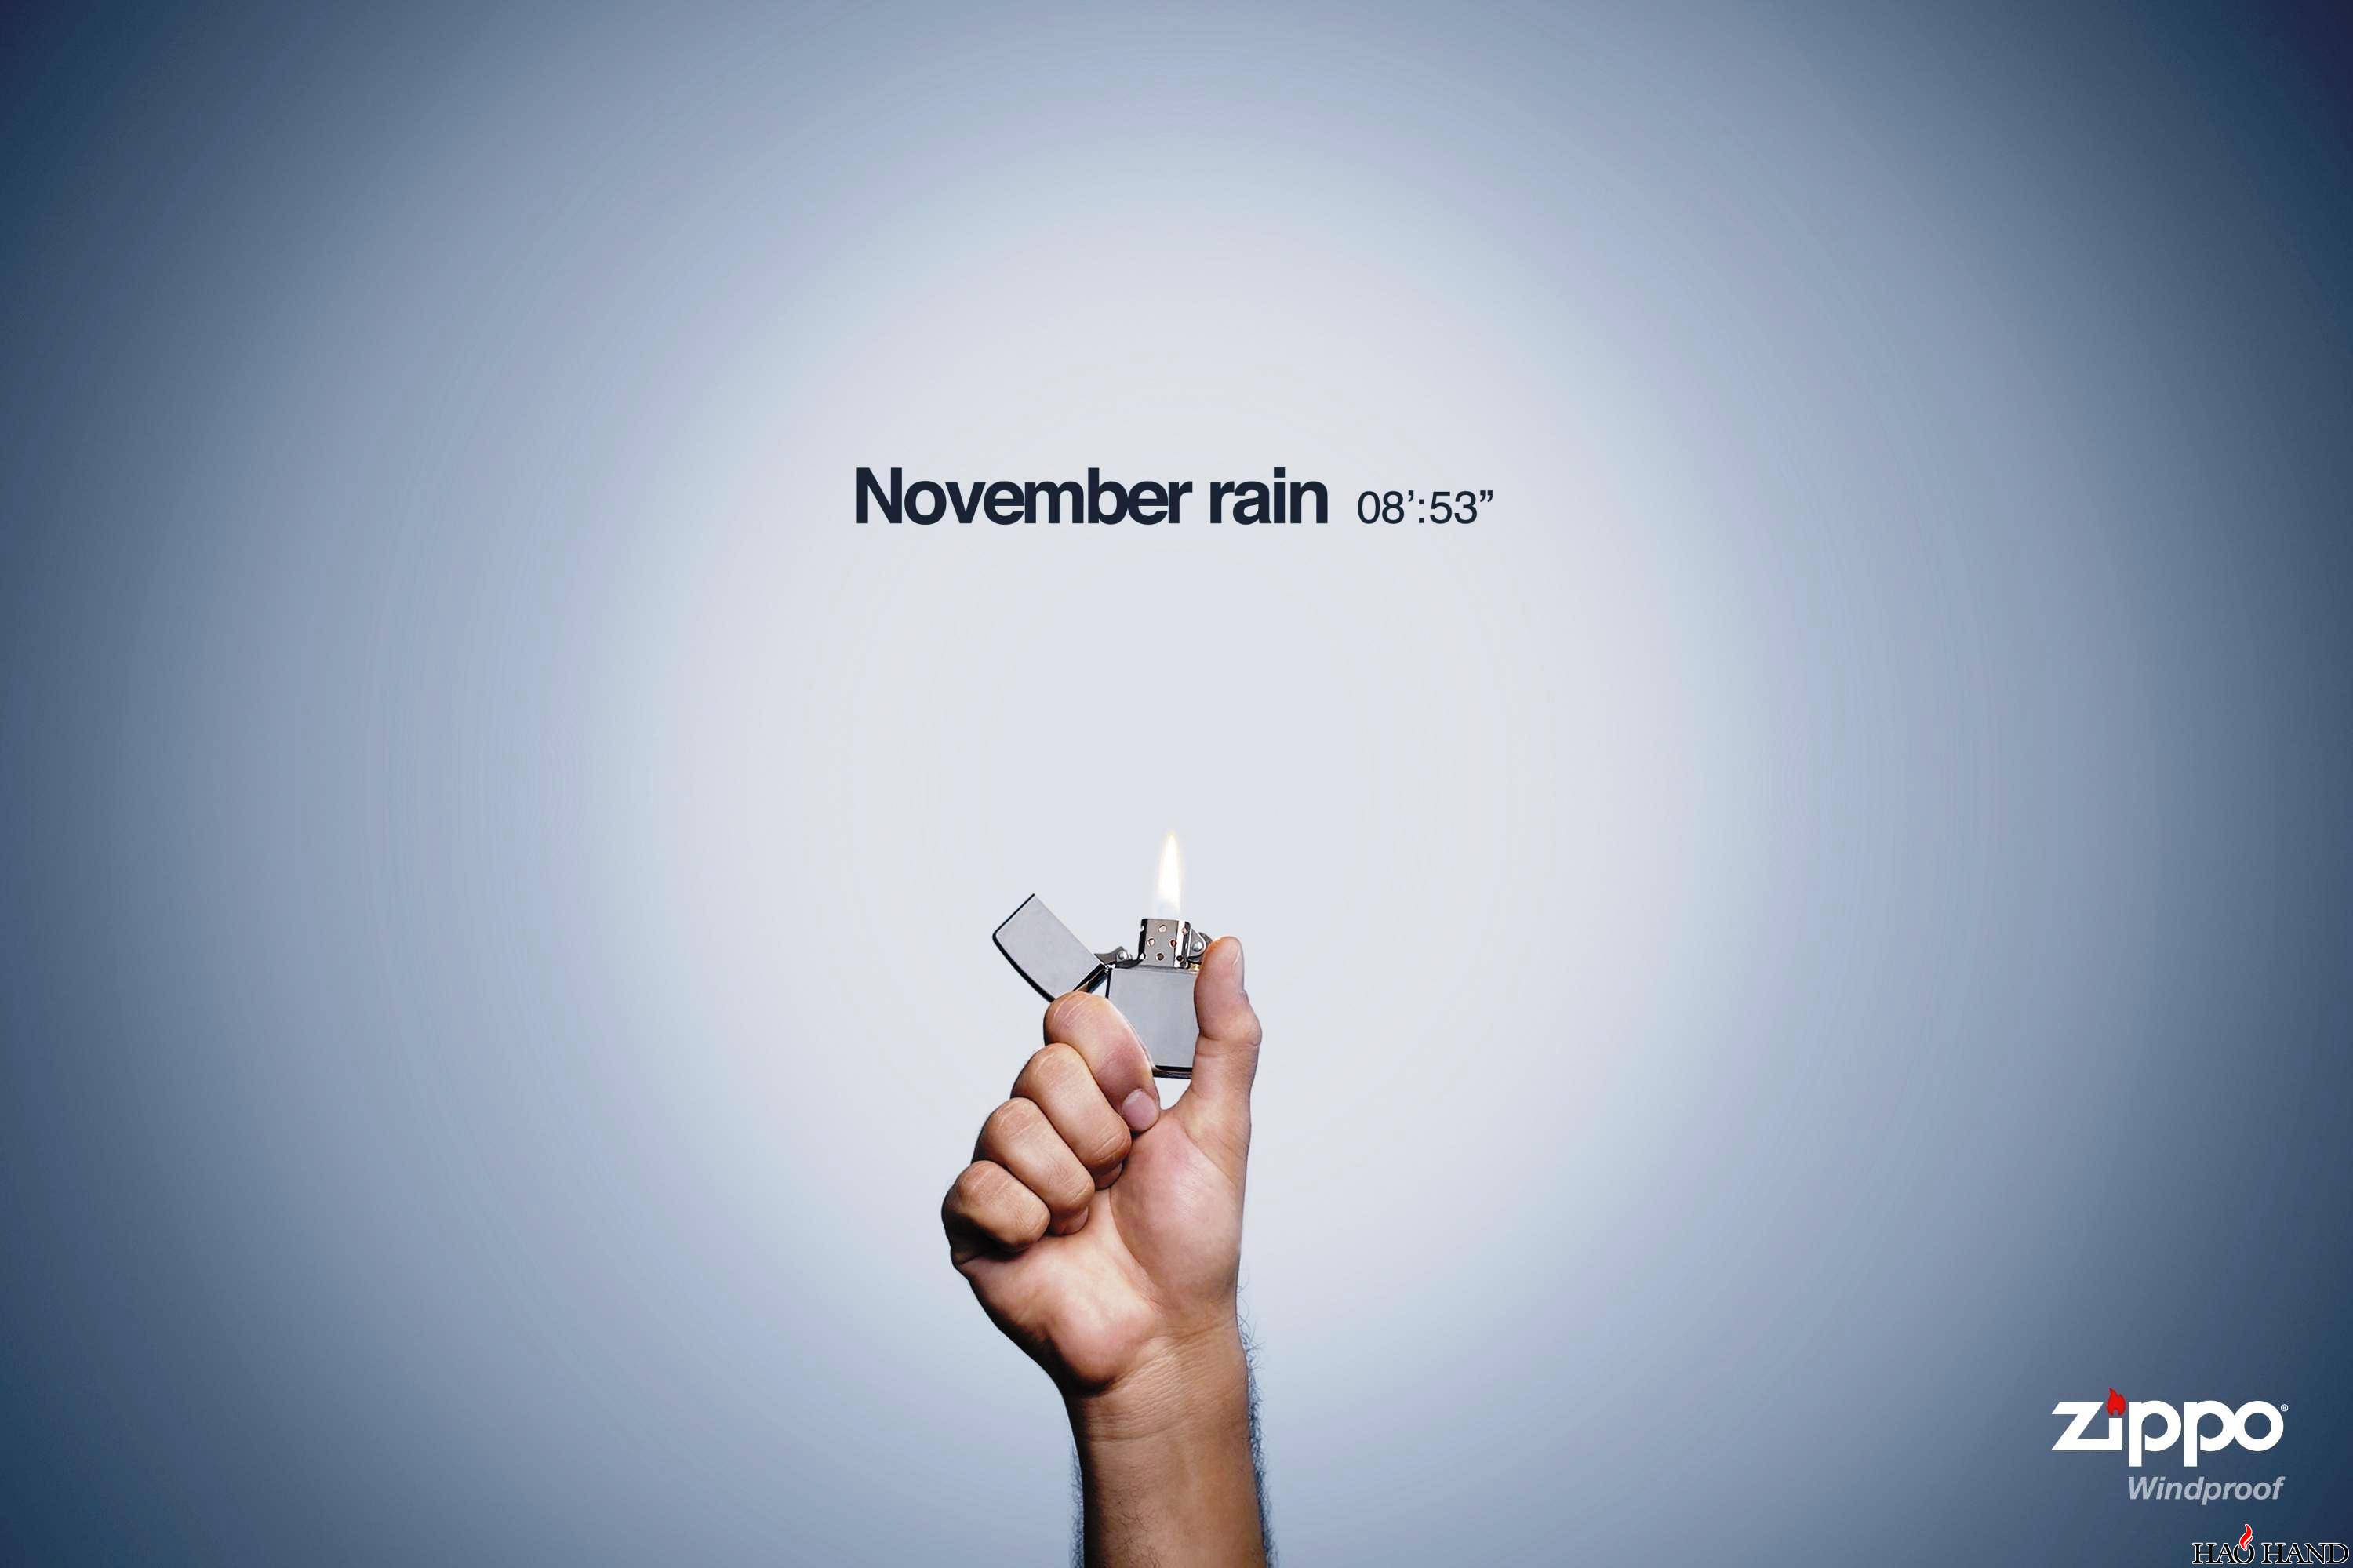 zippo-windproof-november-rain-anything-for-love-print-550-adeevee.jpg